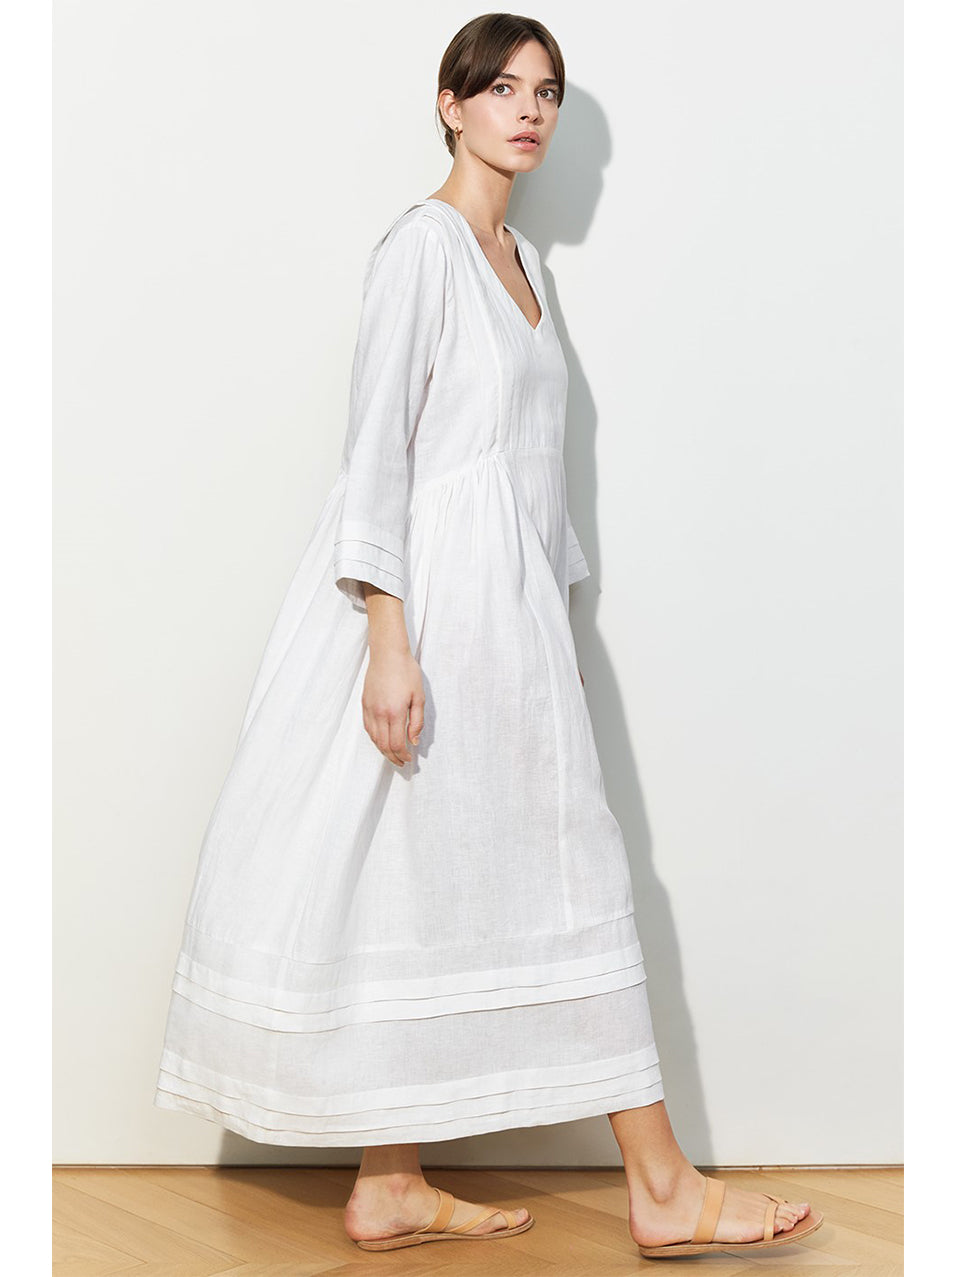 Patti - White Linen Dress - Mondo Corsini